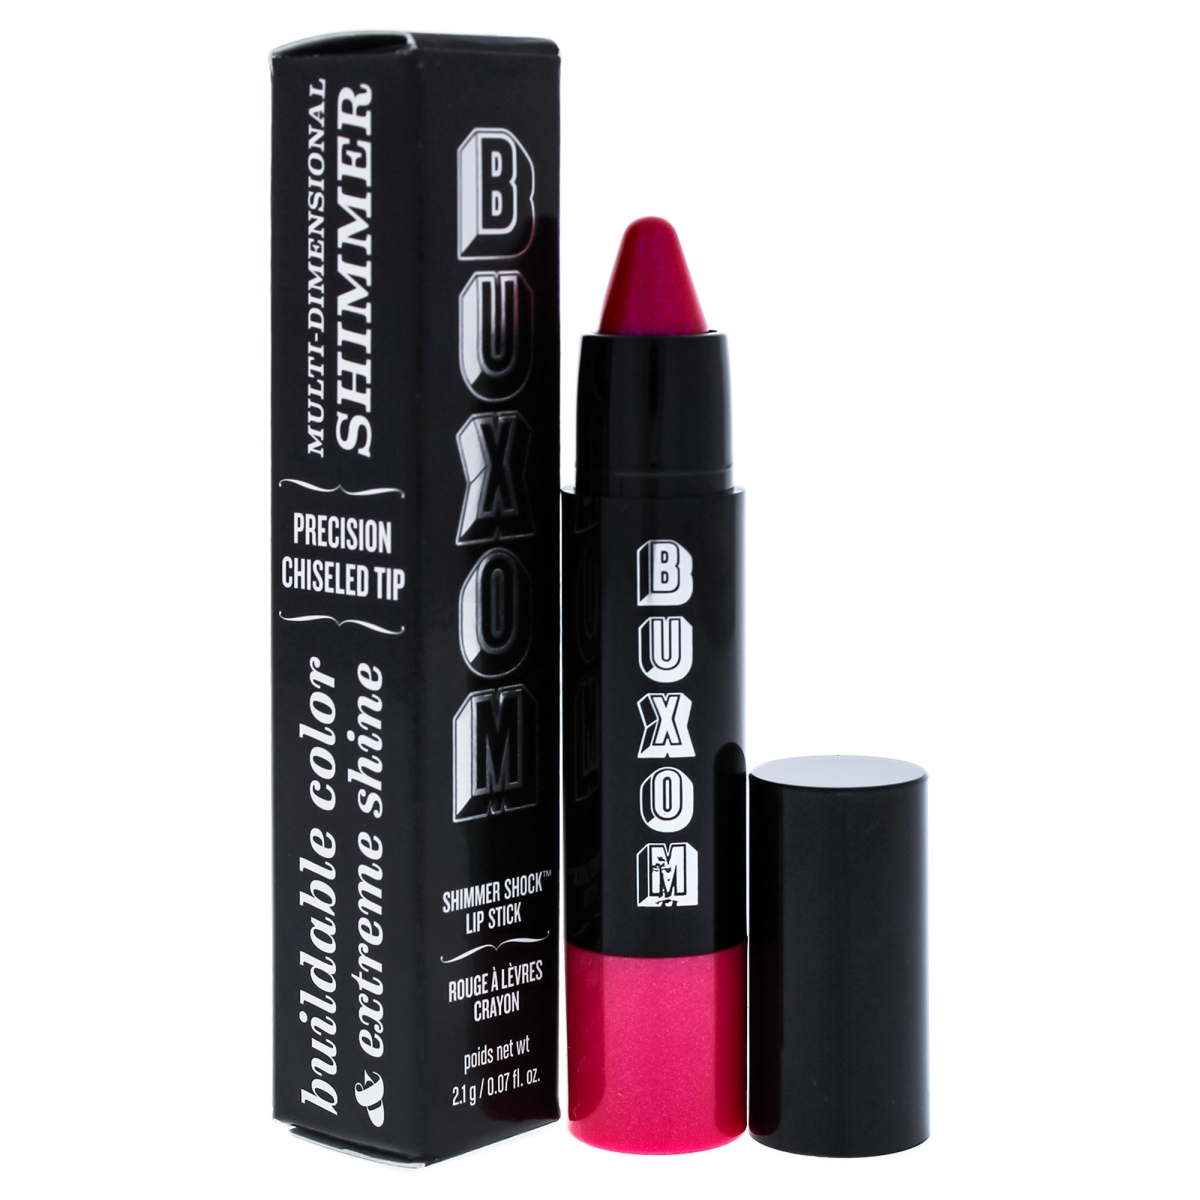 I0086660 0.07 Oz Shimmer Shock Lipstick For Womens - Va-va-voltage